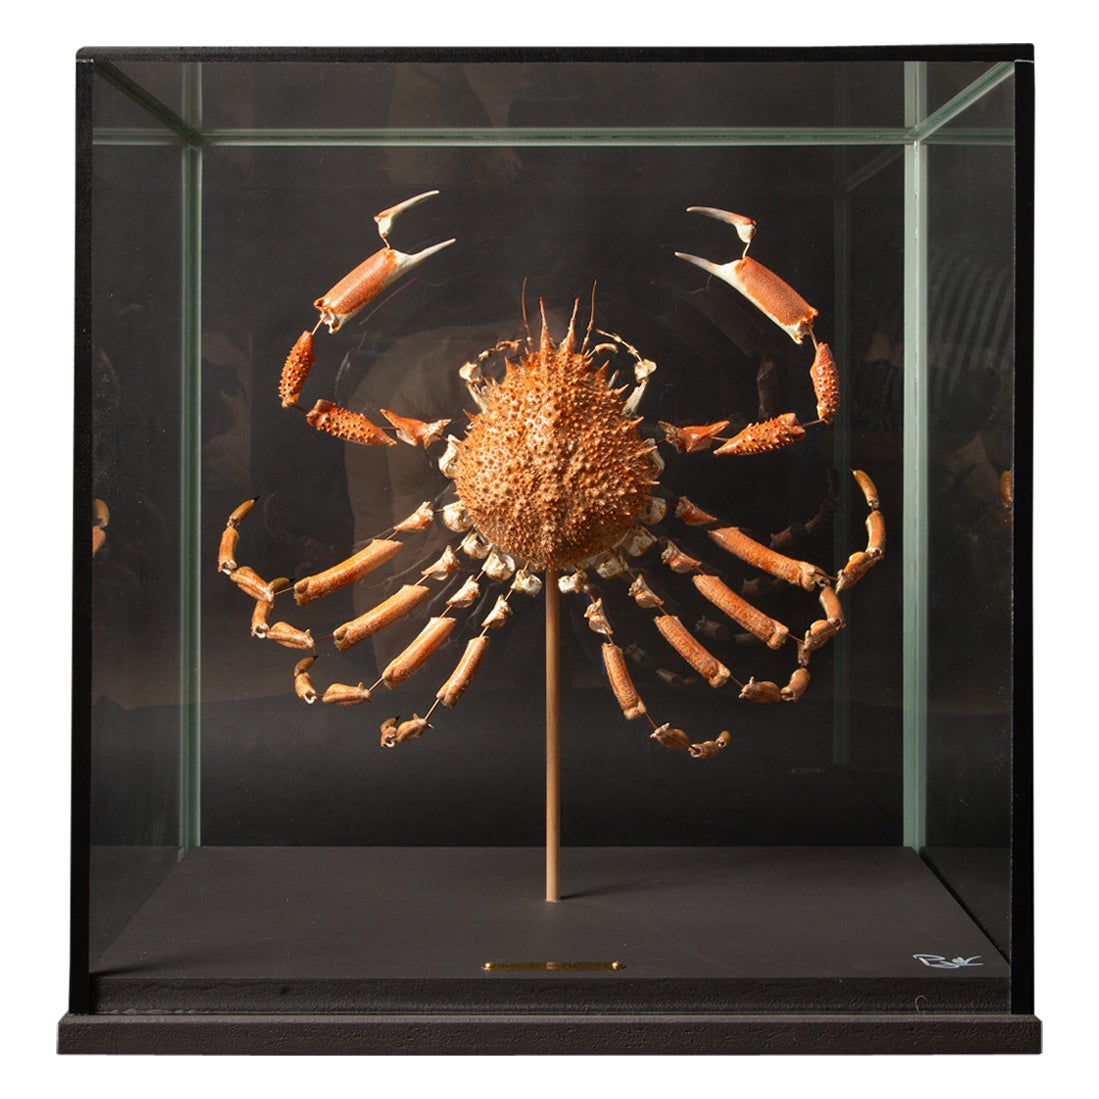 Deconstructed Spiny Spider Crab (Maja Brachydactyla) Specimen Under Glass Case For Sale